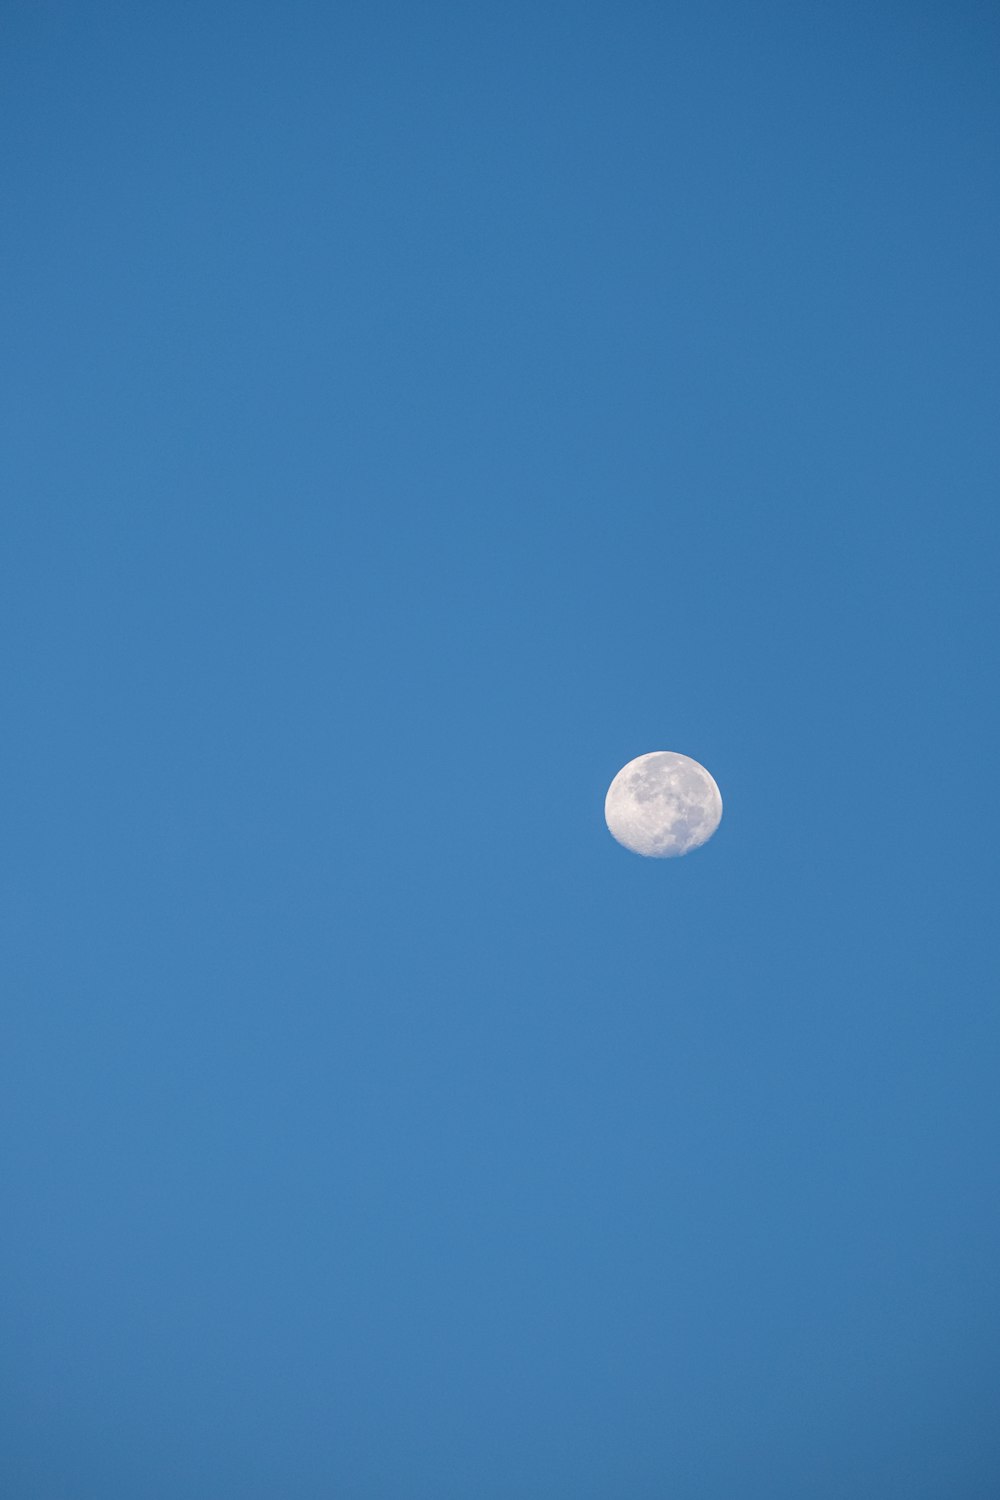 a full moon in a clear blue sky